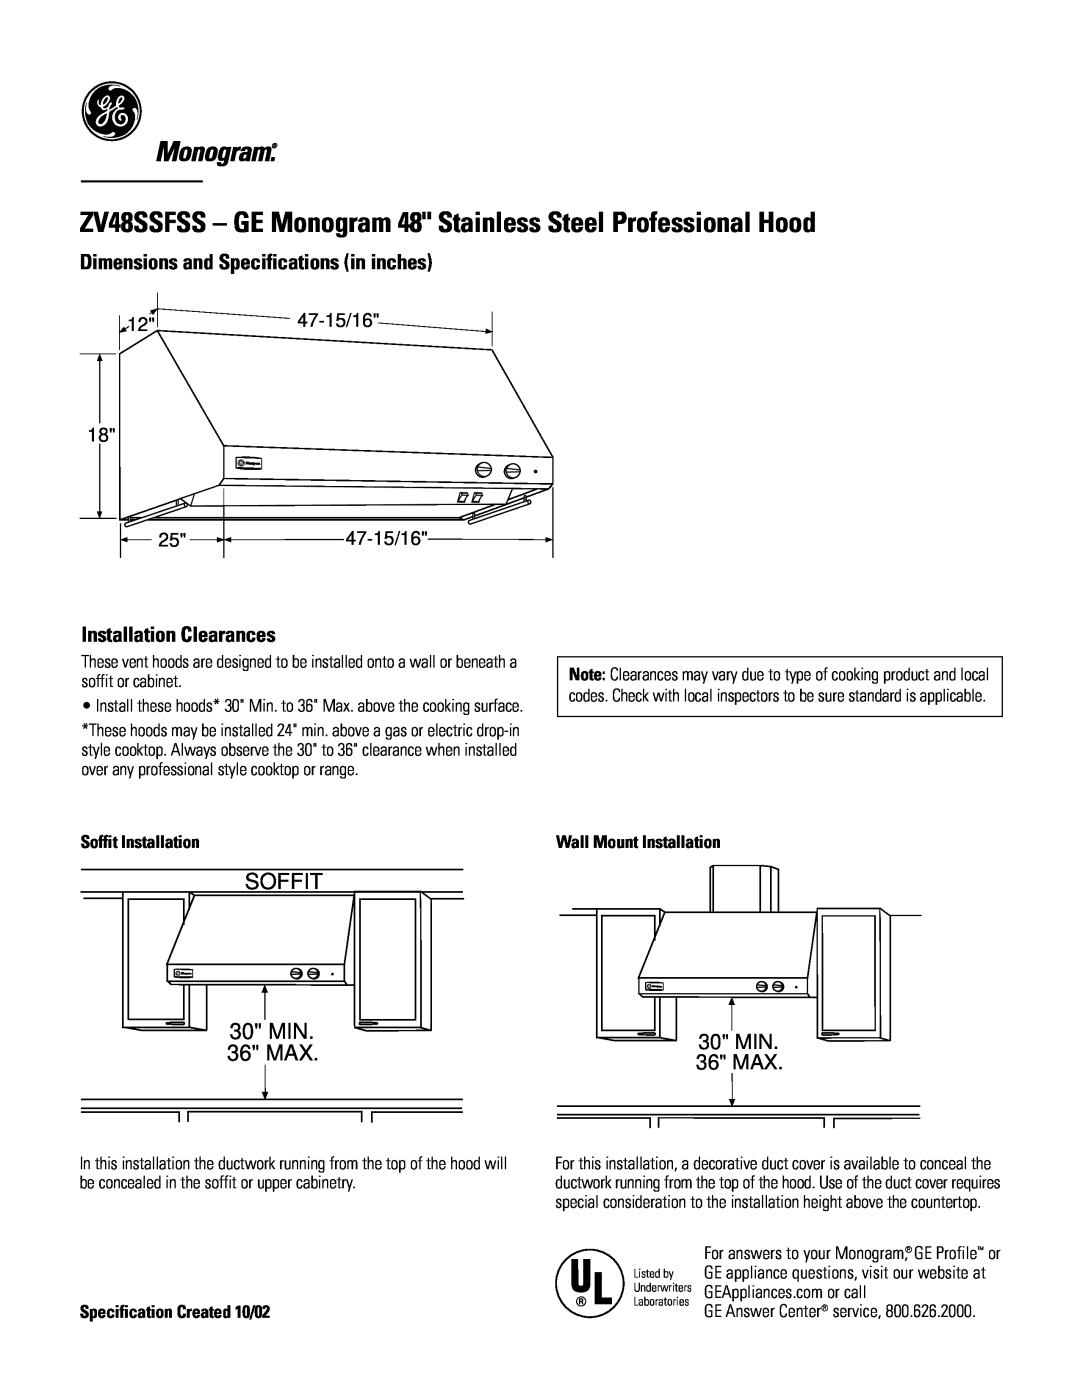 GE Monogram dimensions ZV48SSFSS - GE Monogram 48 Stainless Steel Professional Hood, Installation Clearances, 47-15/16 